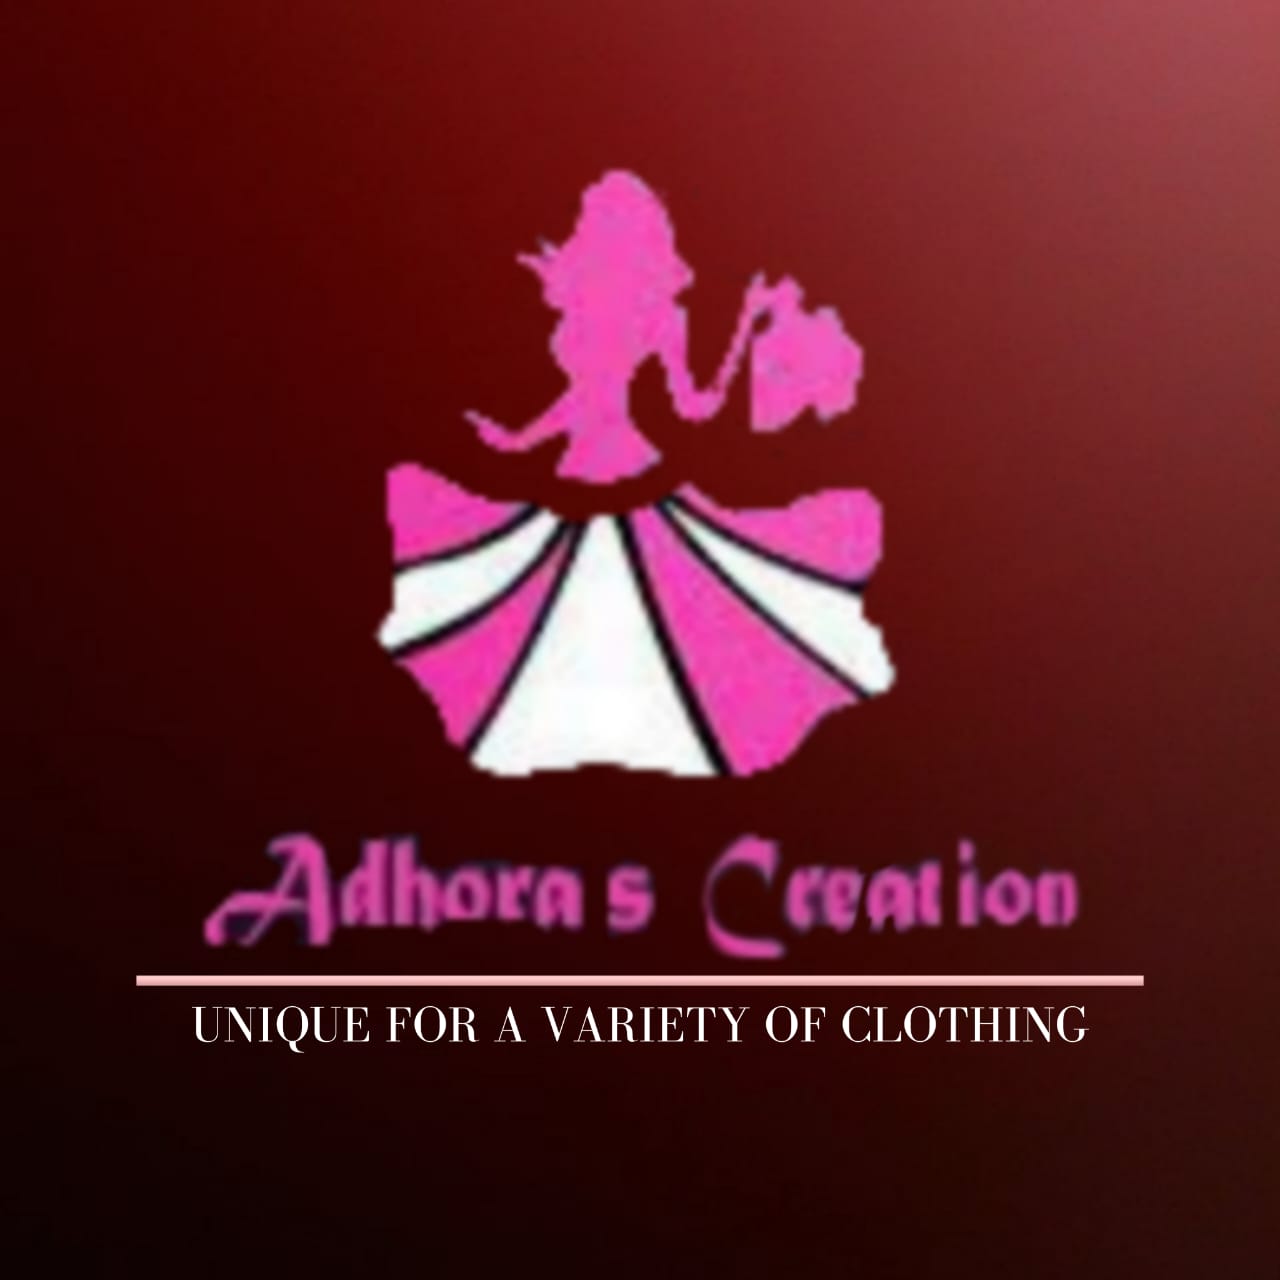 Adhora's Creation